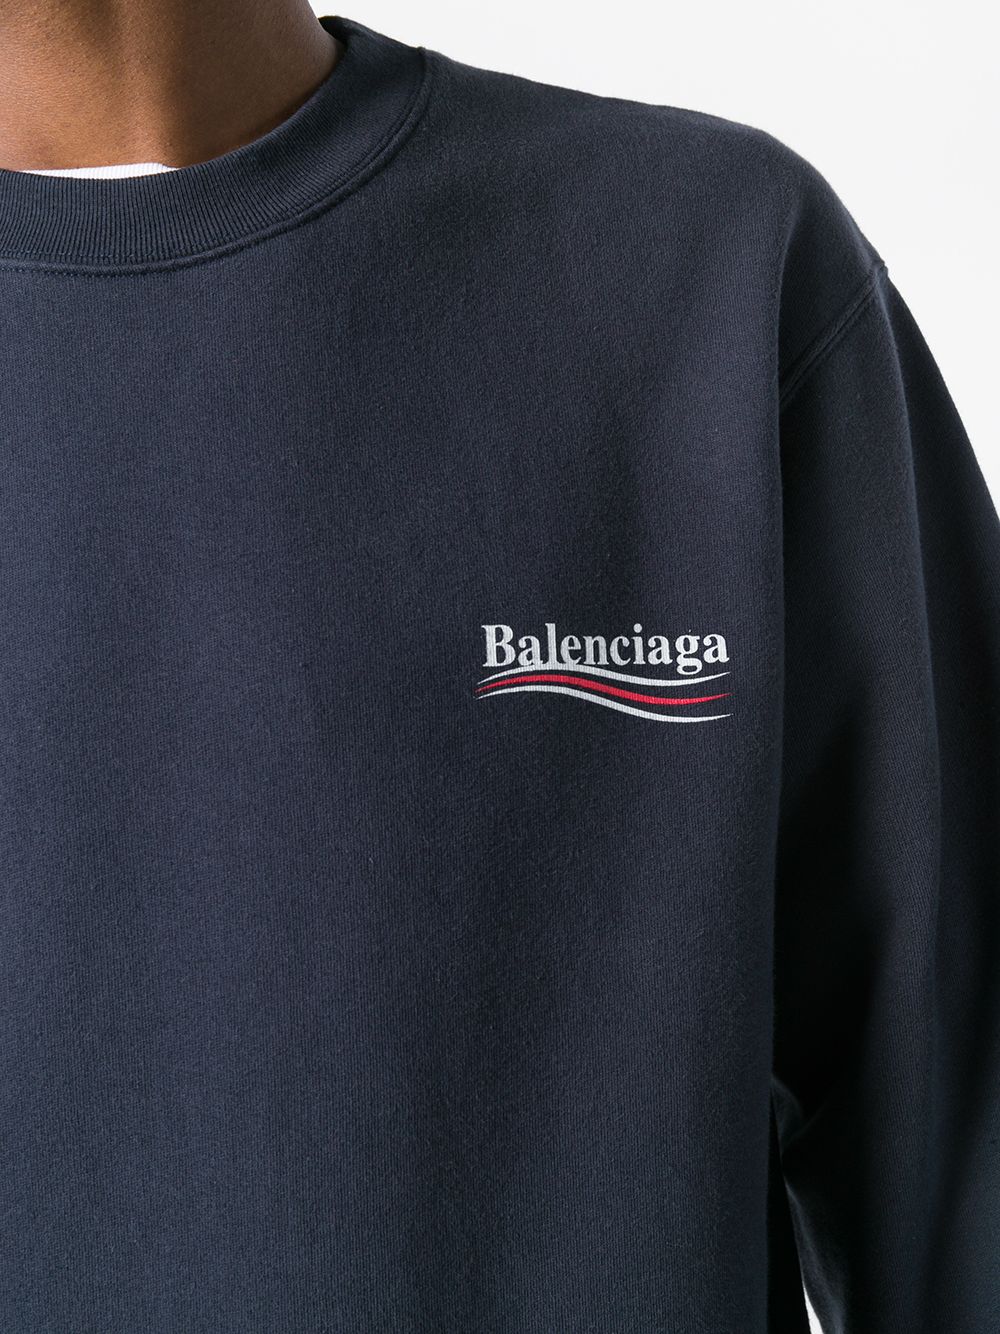 фото Balenciaga толстовка с логотипом